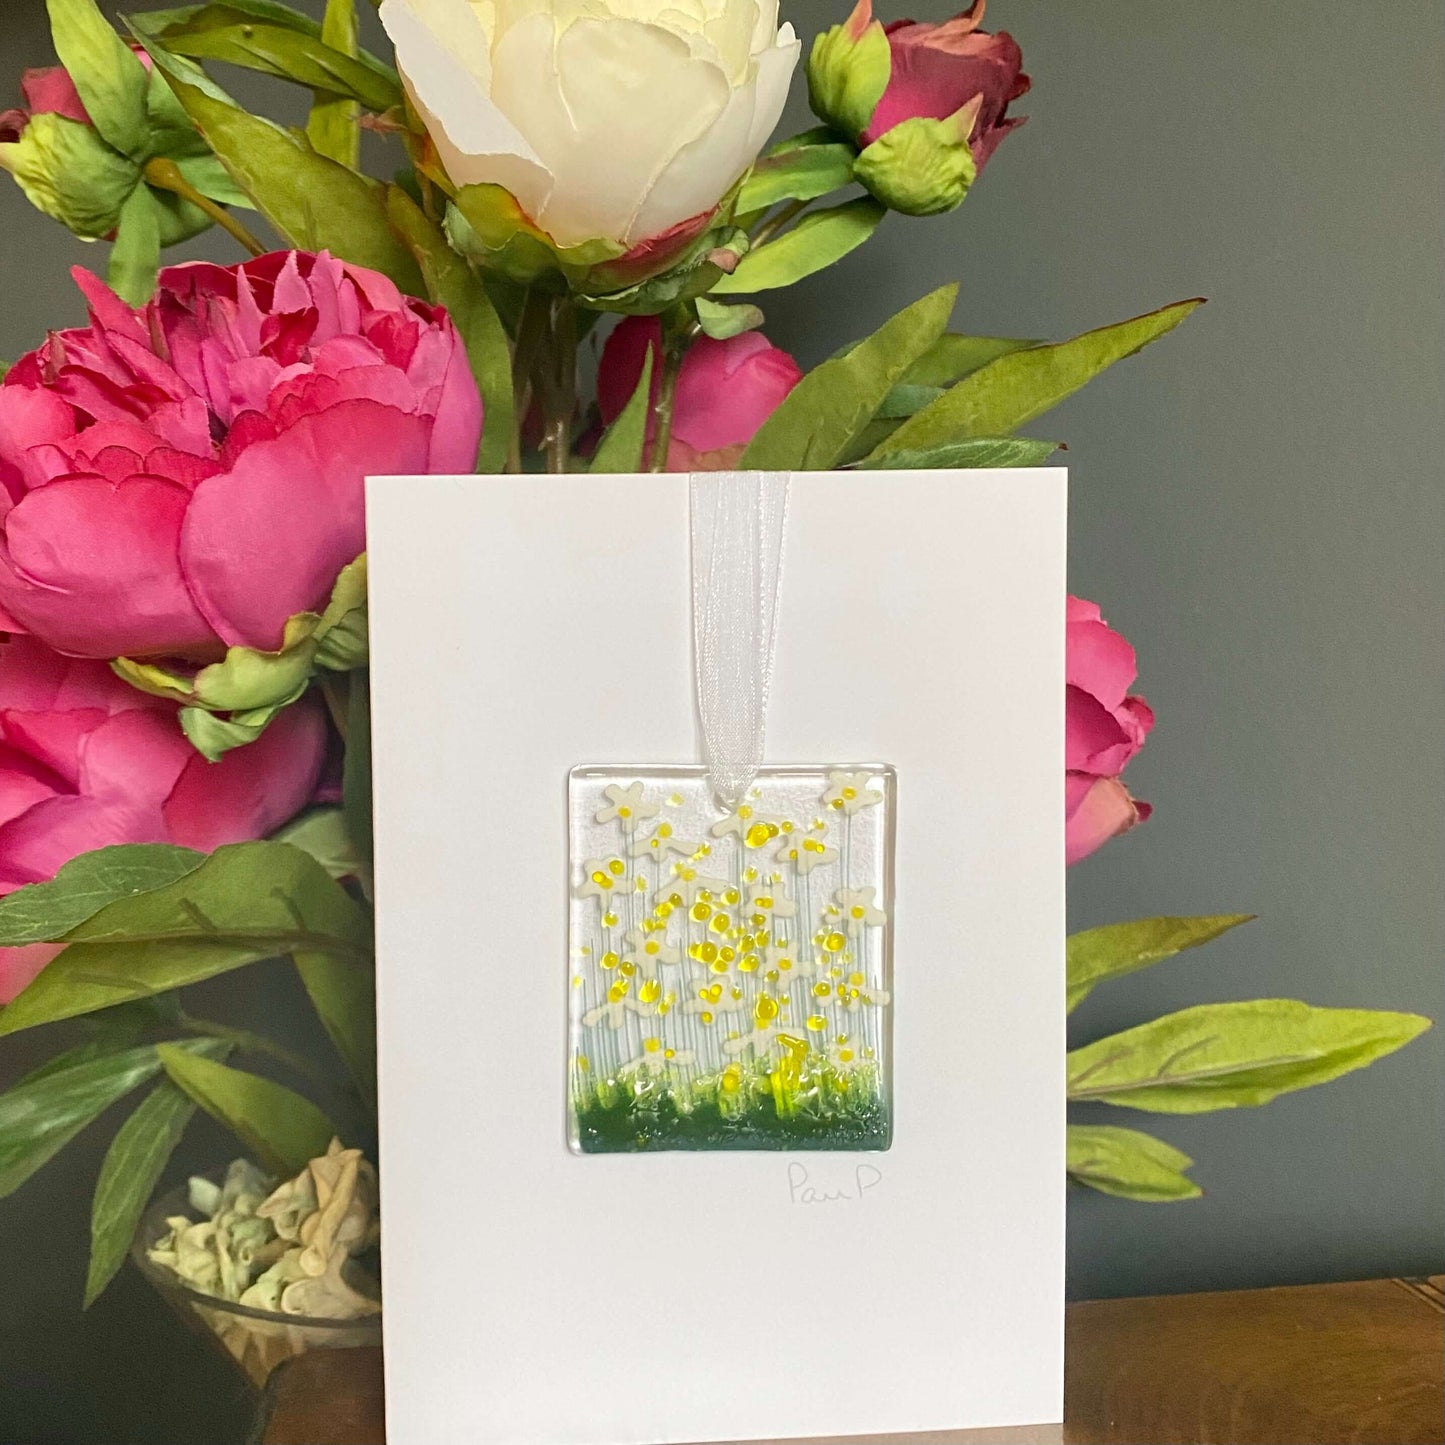 Daisy Fused Glass Handmade Hanging Token Greetings Card Twelve Silver Trees